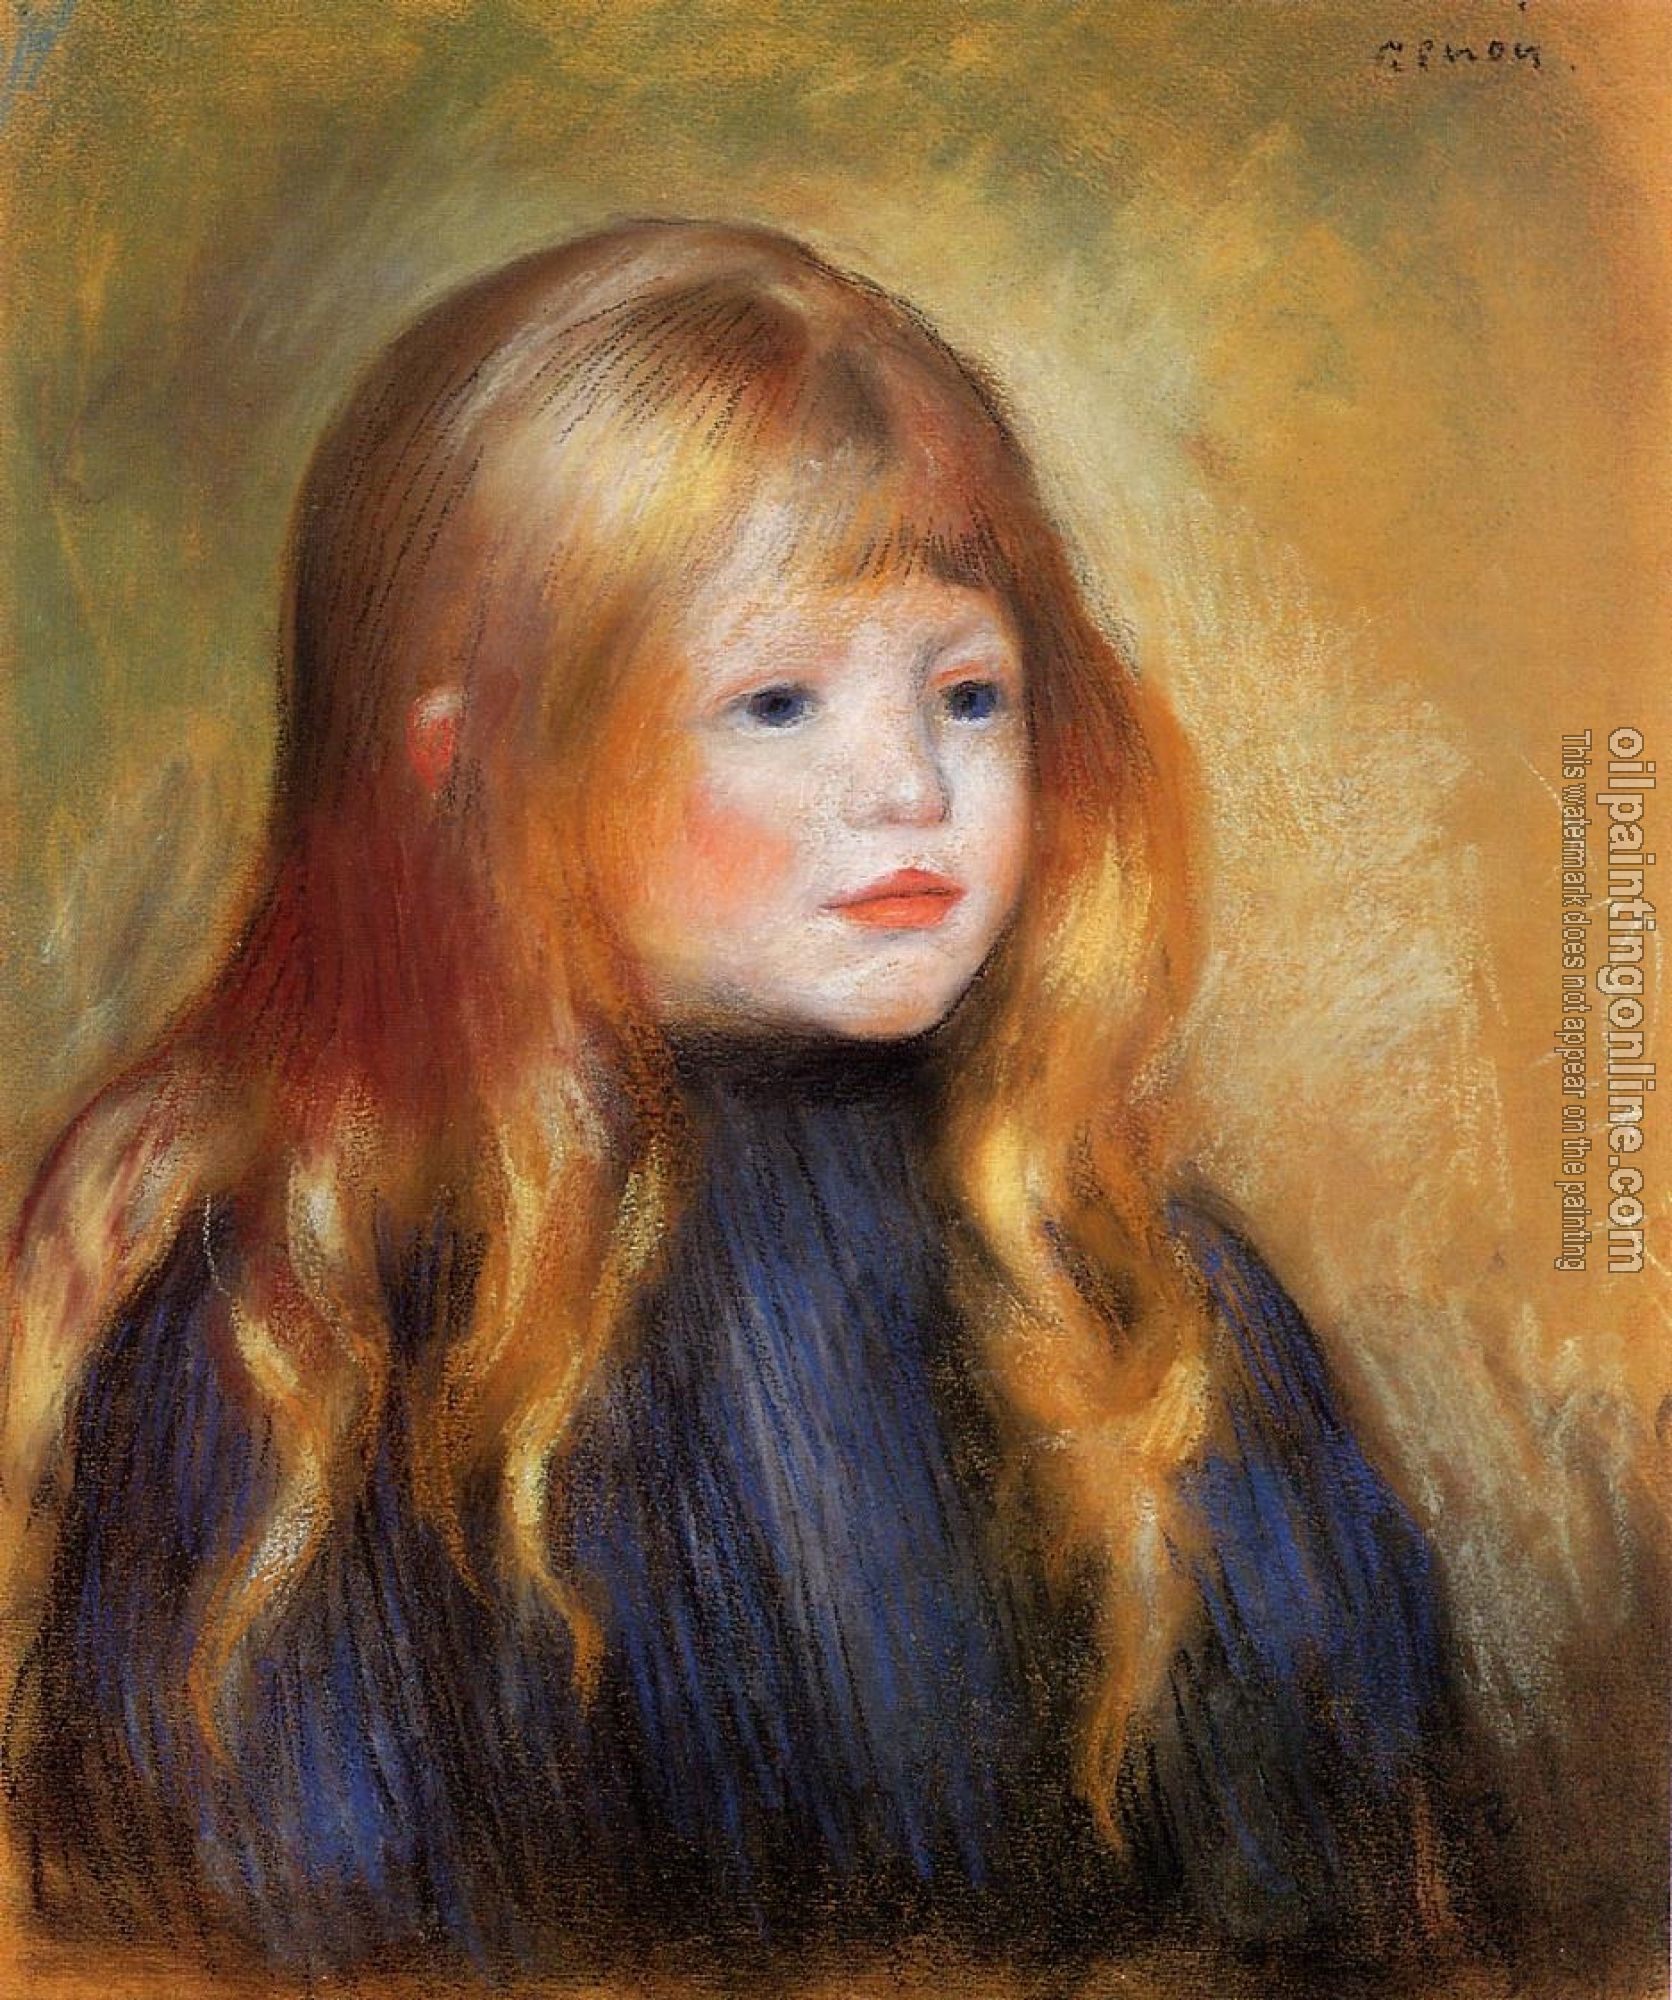 Renoir, Pierre Auguste - Head of a Child